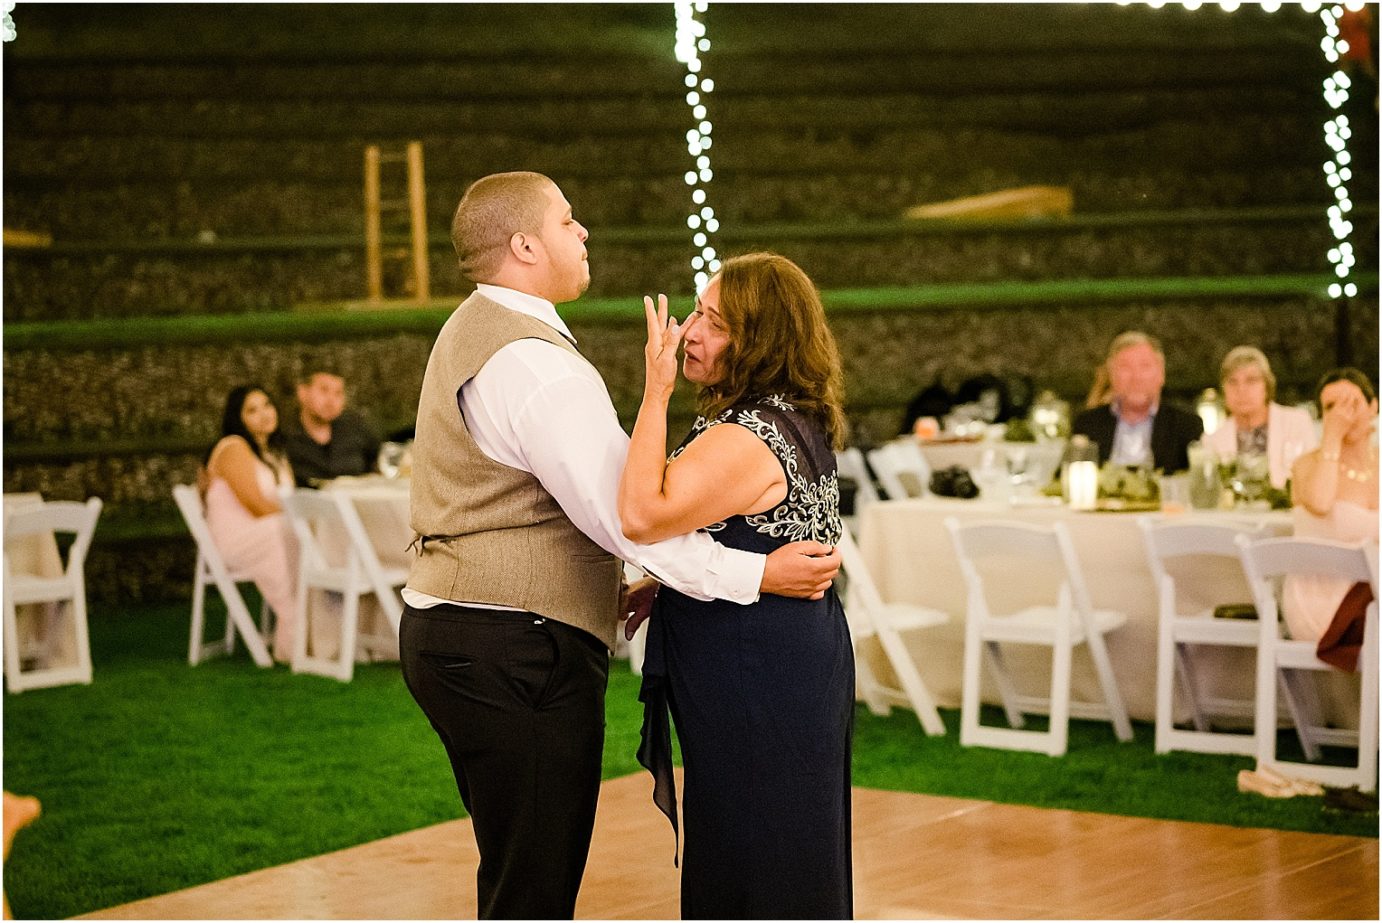 Settler's Creek Wedding Couer D'alene Photographer Miguel and Sara dancing